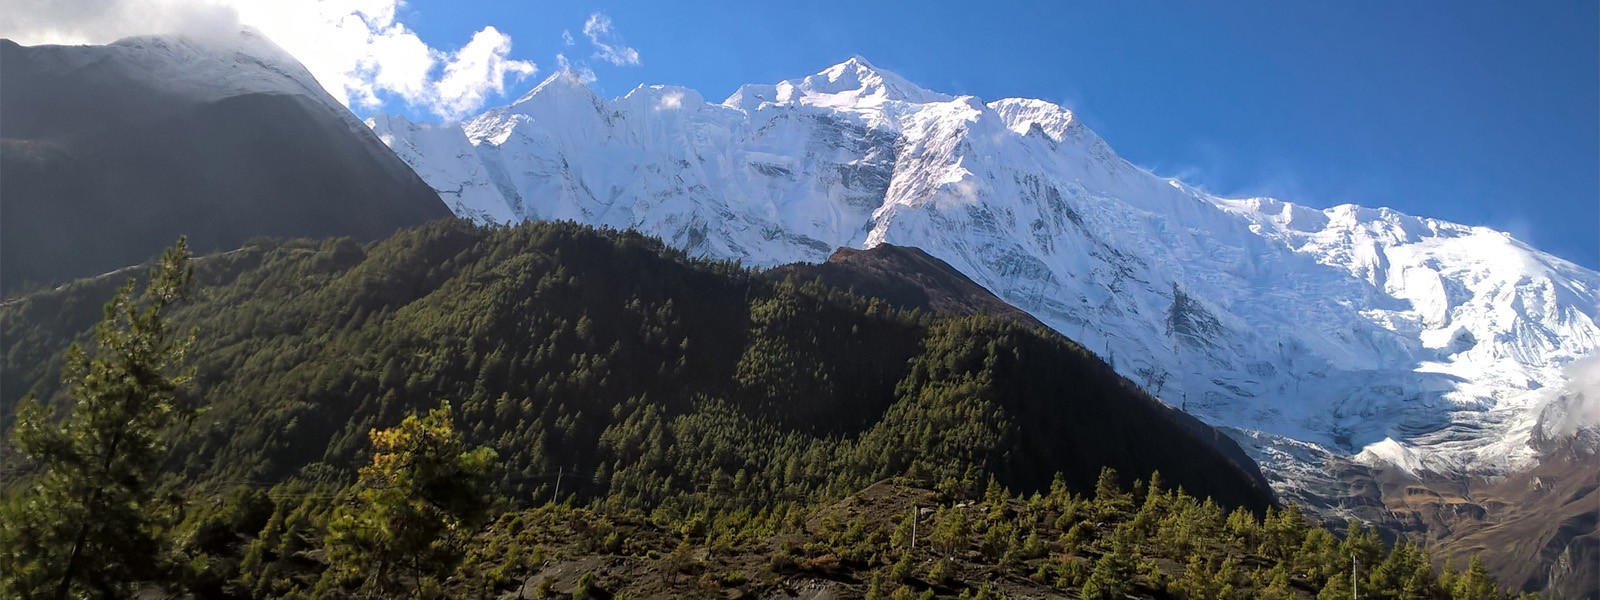 Annapurna Circuit Trekking in Annapurna Region